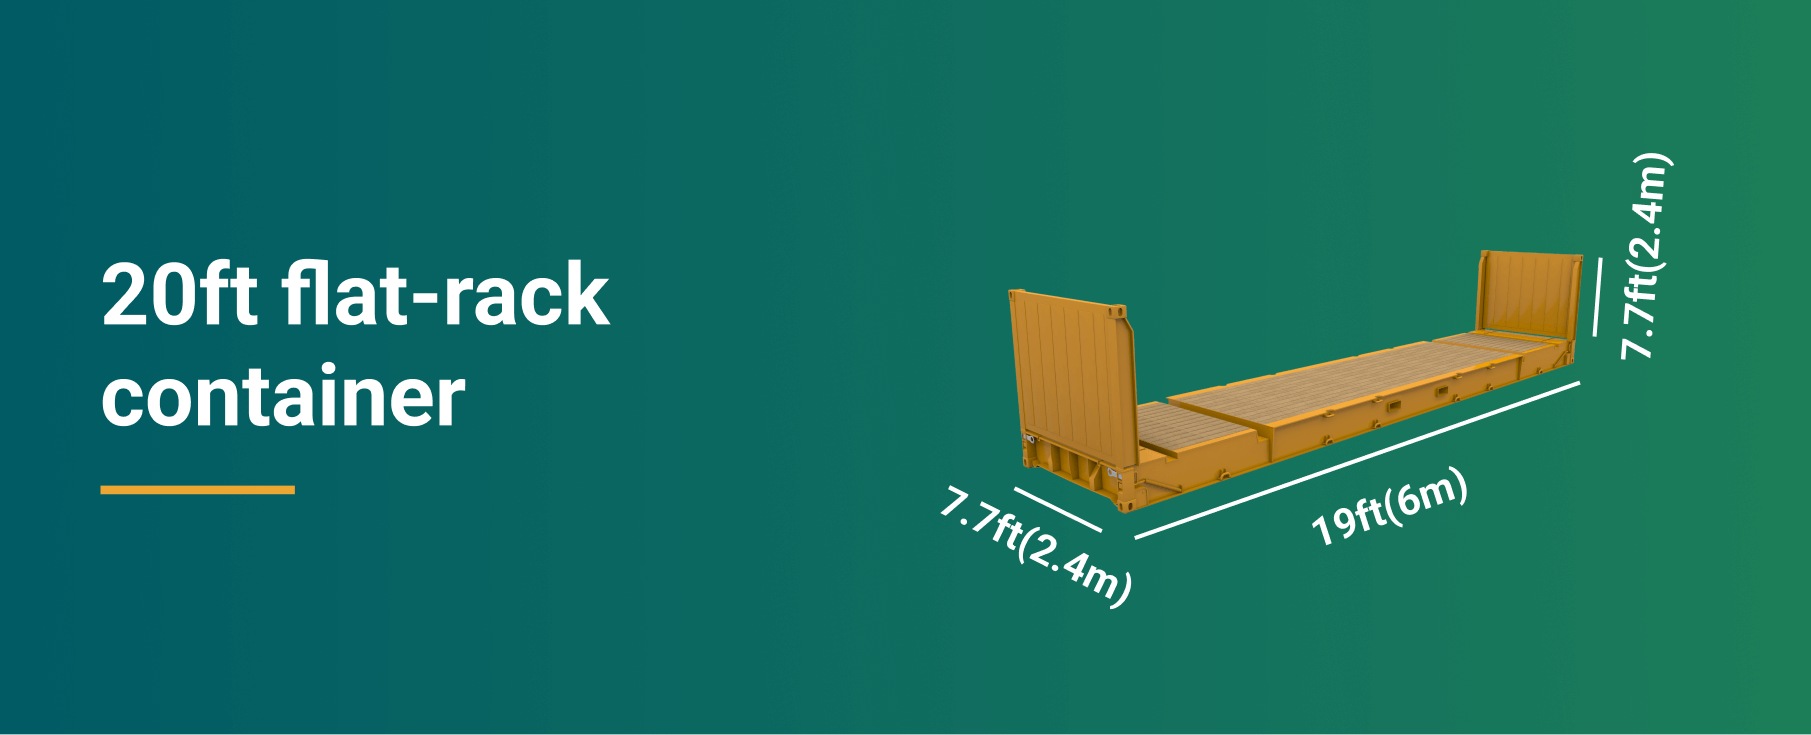 flatrackcontainer dimensions